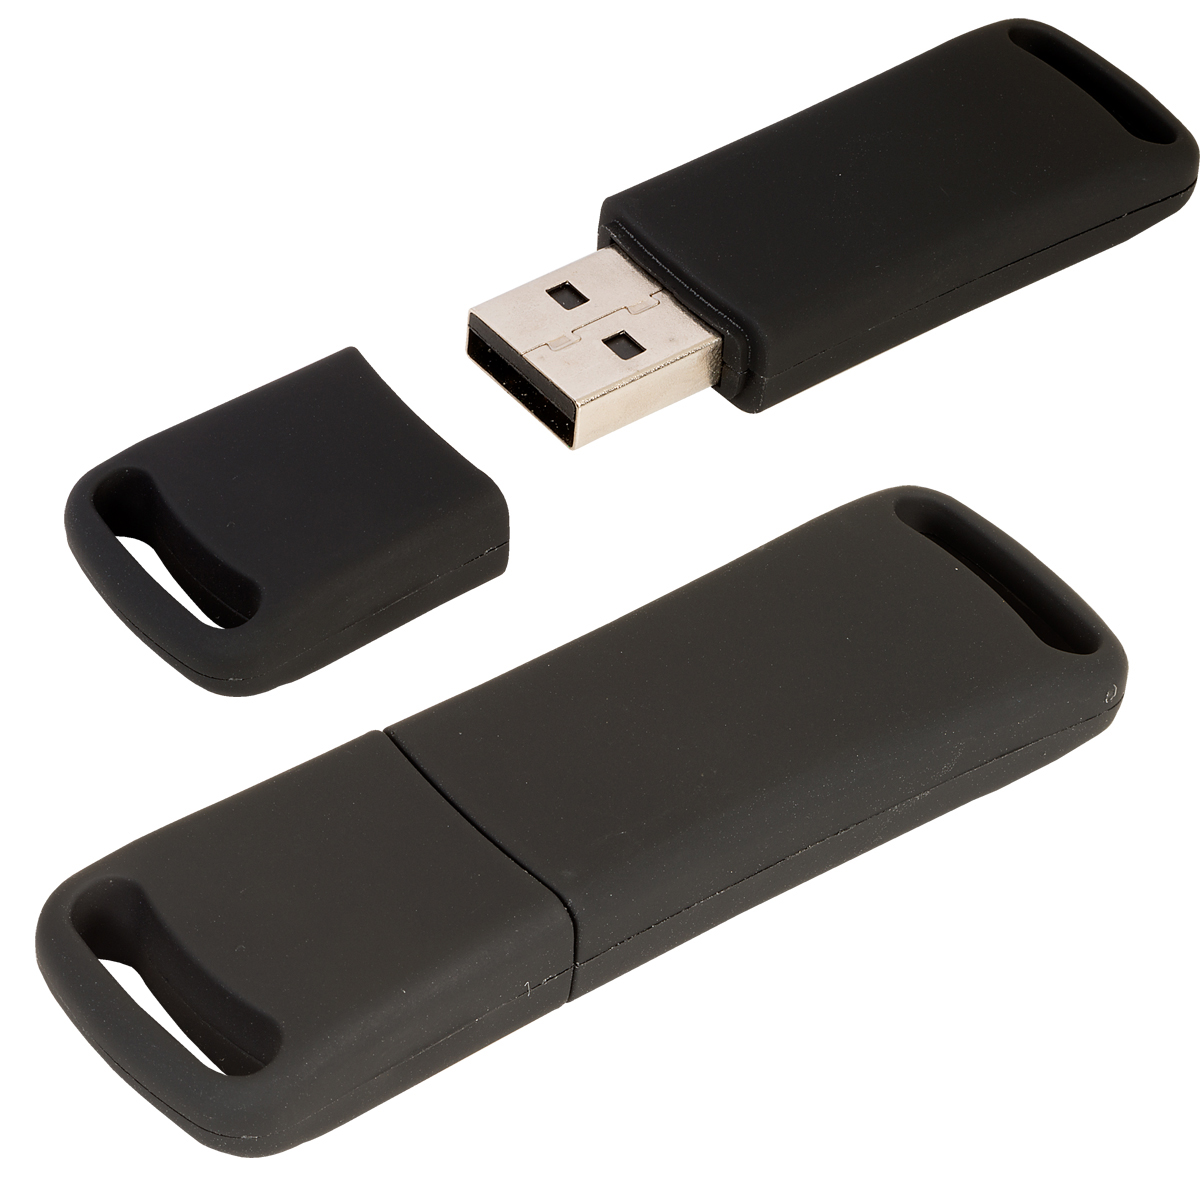 Rubberized USB Memory Flash Drive - 2GB